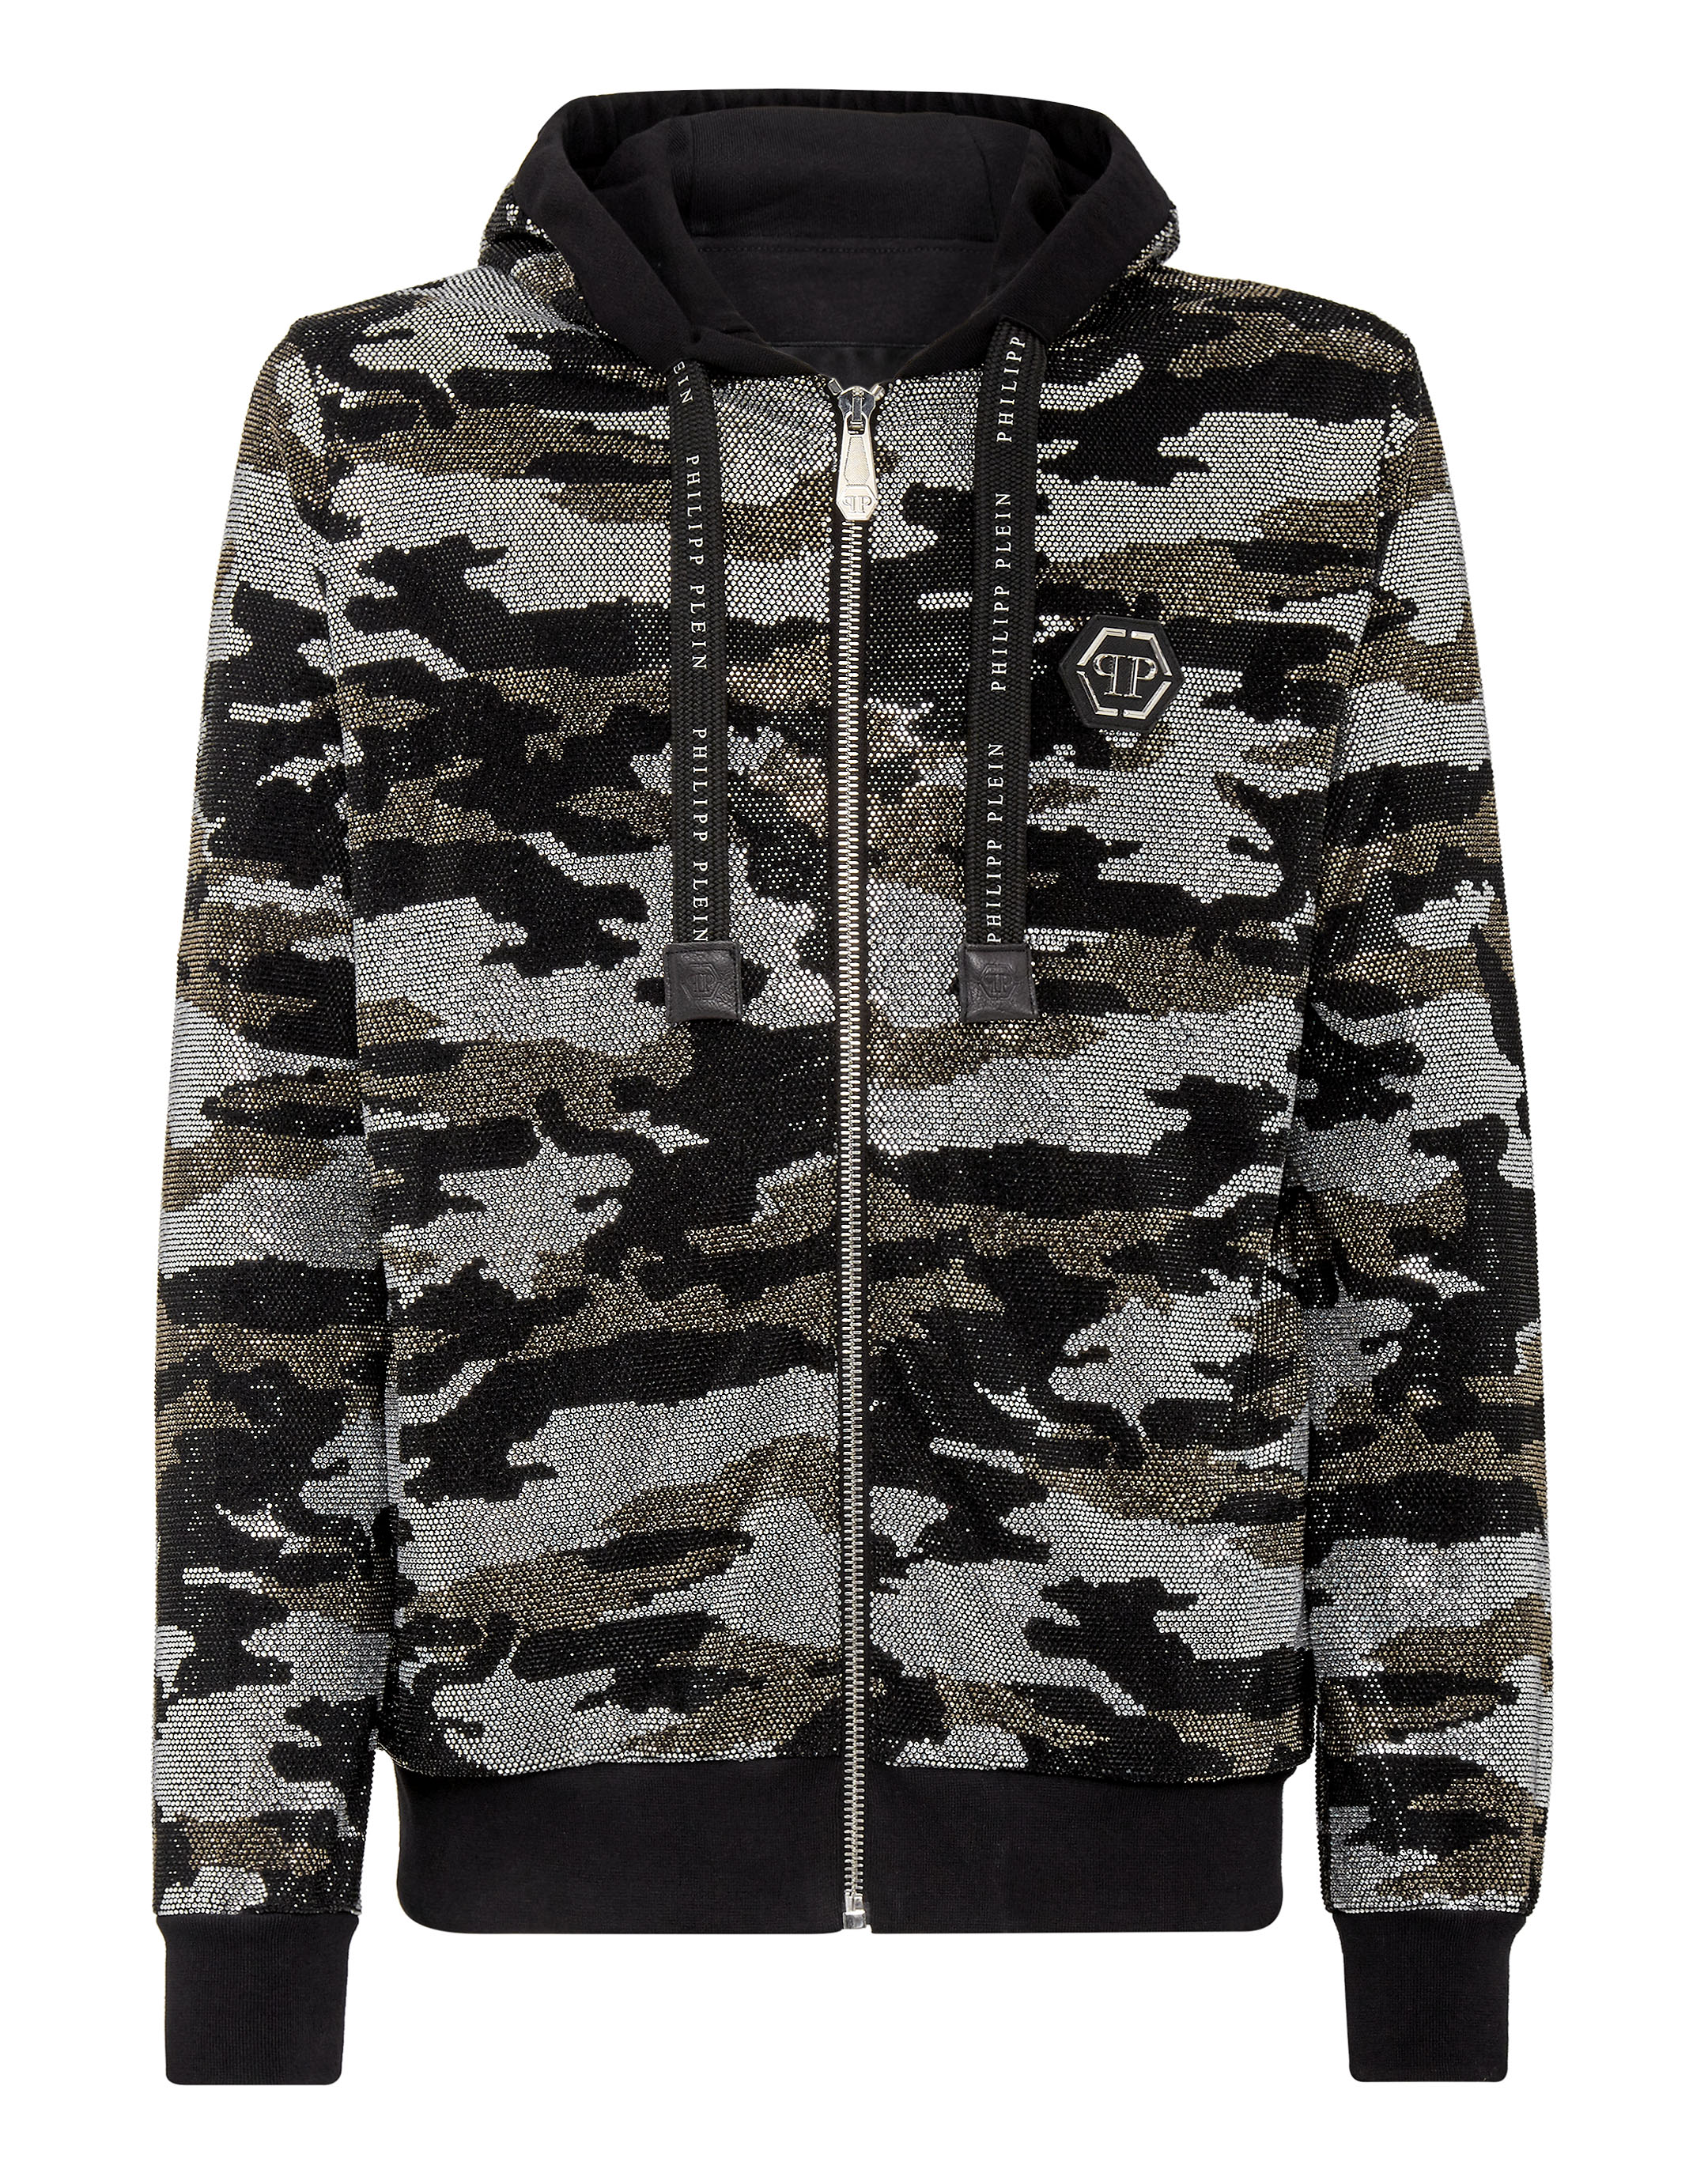 Hoodie Sweatjacket Camouflage | Philipp Plein Outlet